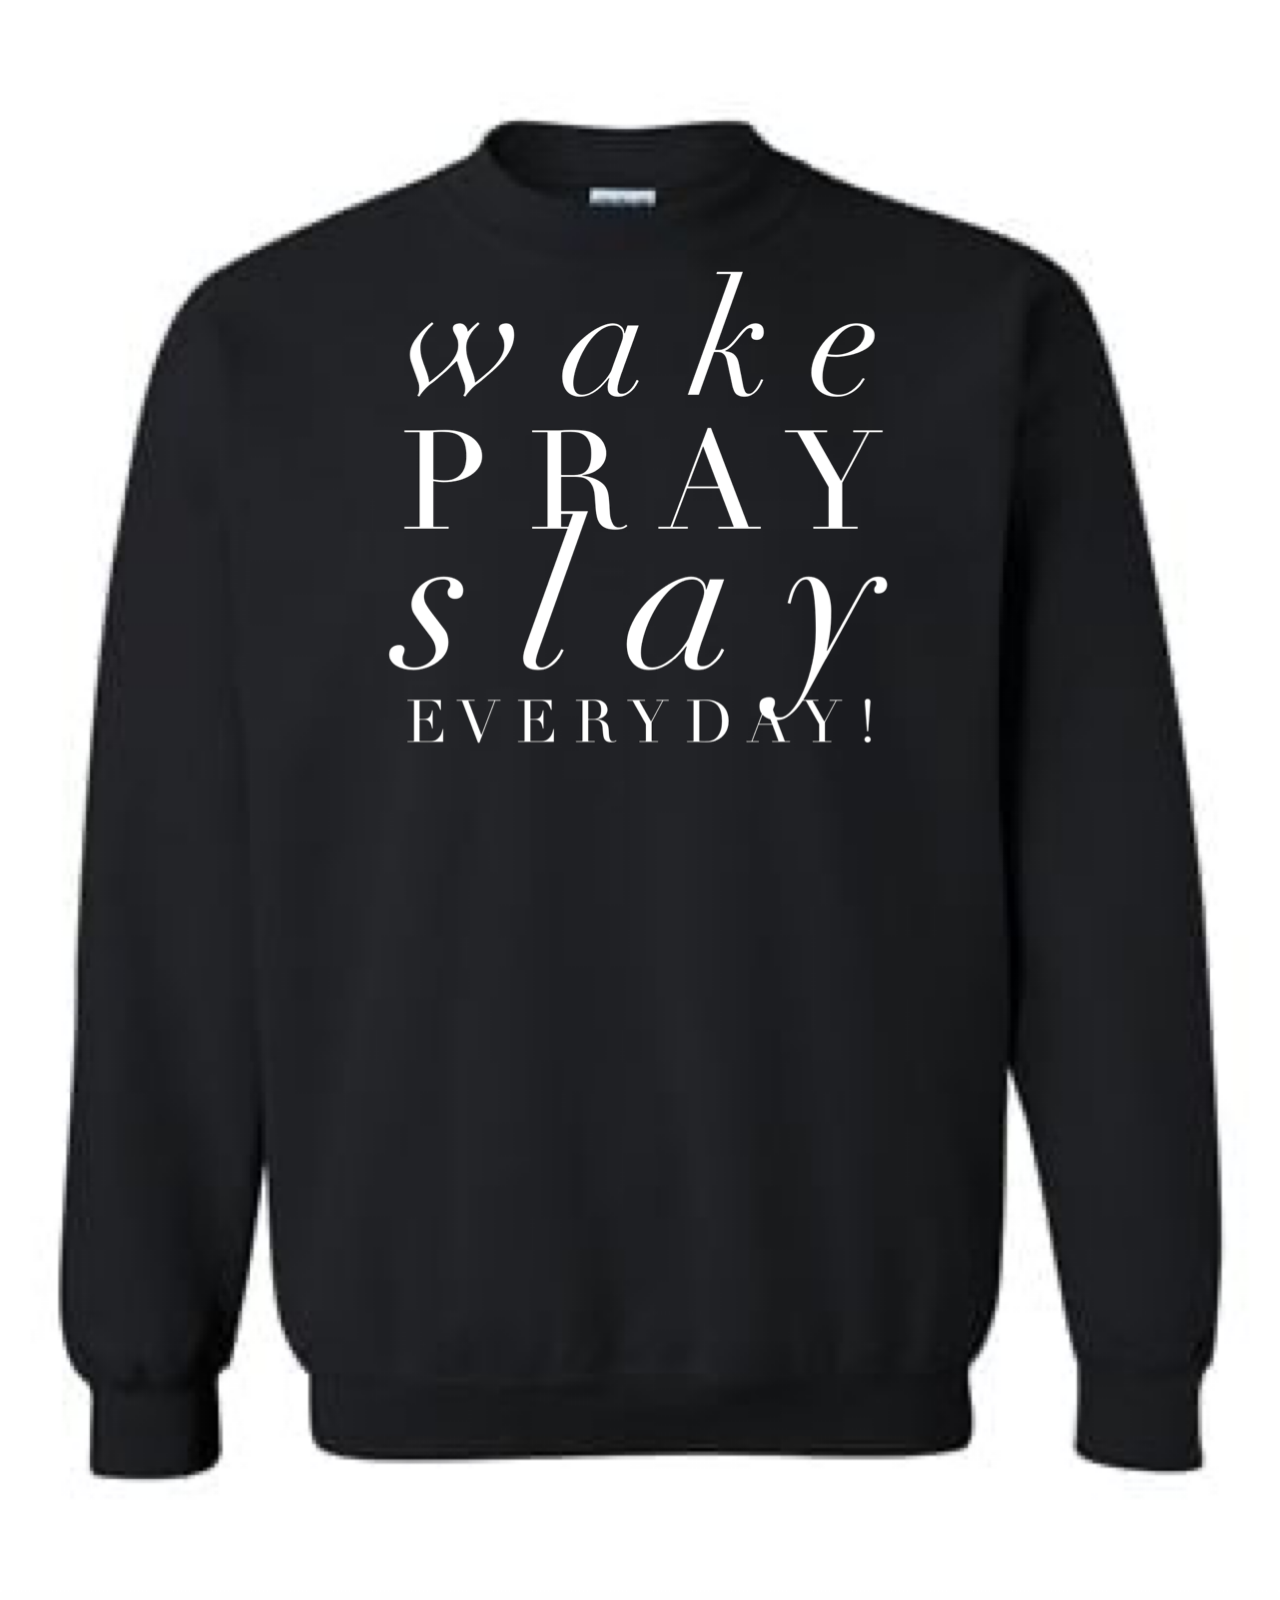 Men's Wake Pray Slay Crewneck Sweatshirt